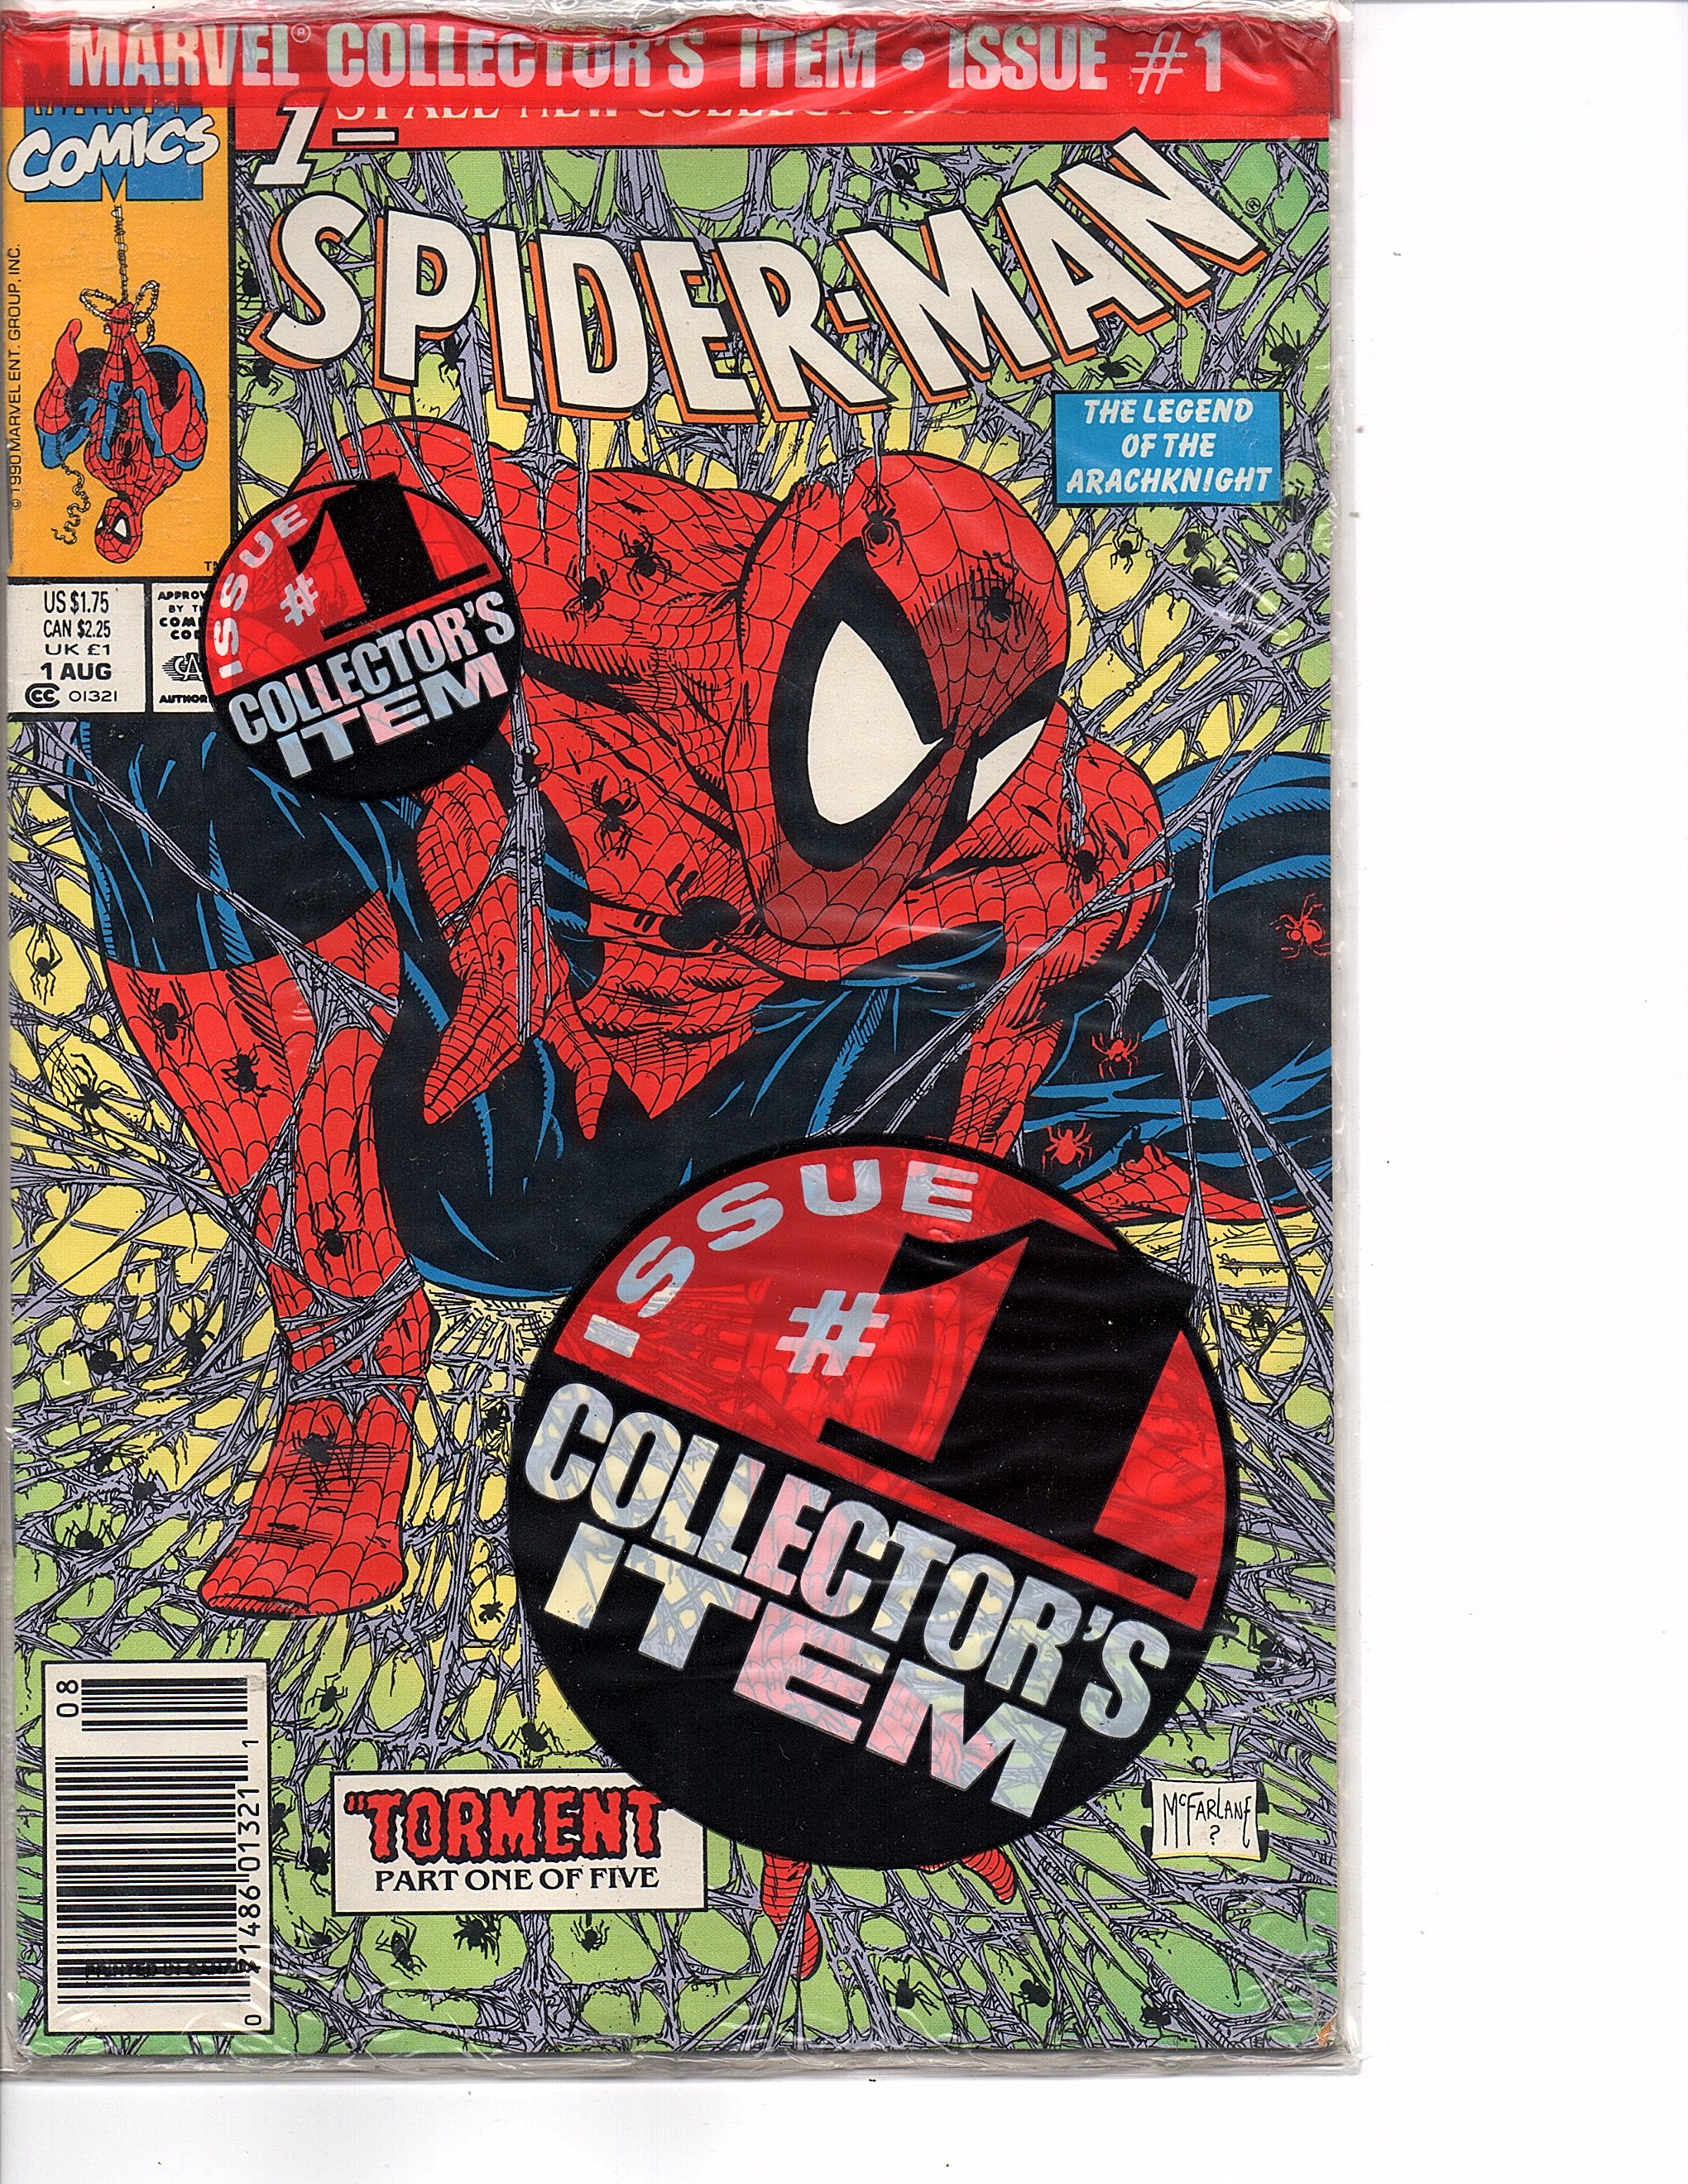 Marvel Comics Spider-Man #1 Todd McFarlane Story & Art Green Cover Bagged |  Comic Books - Modern Age, Marvel, Spider-Man, Superhero / HipComic